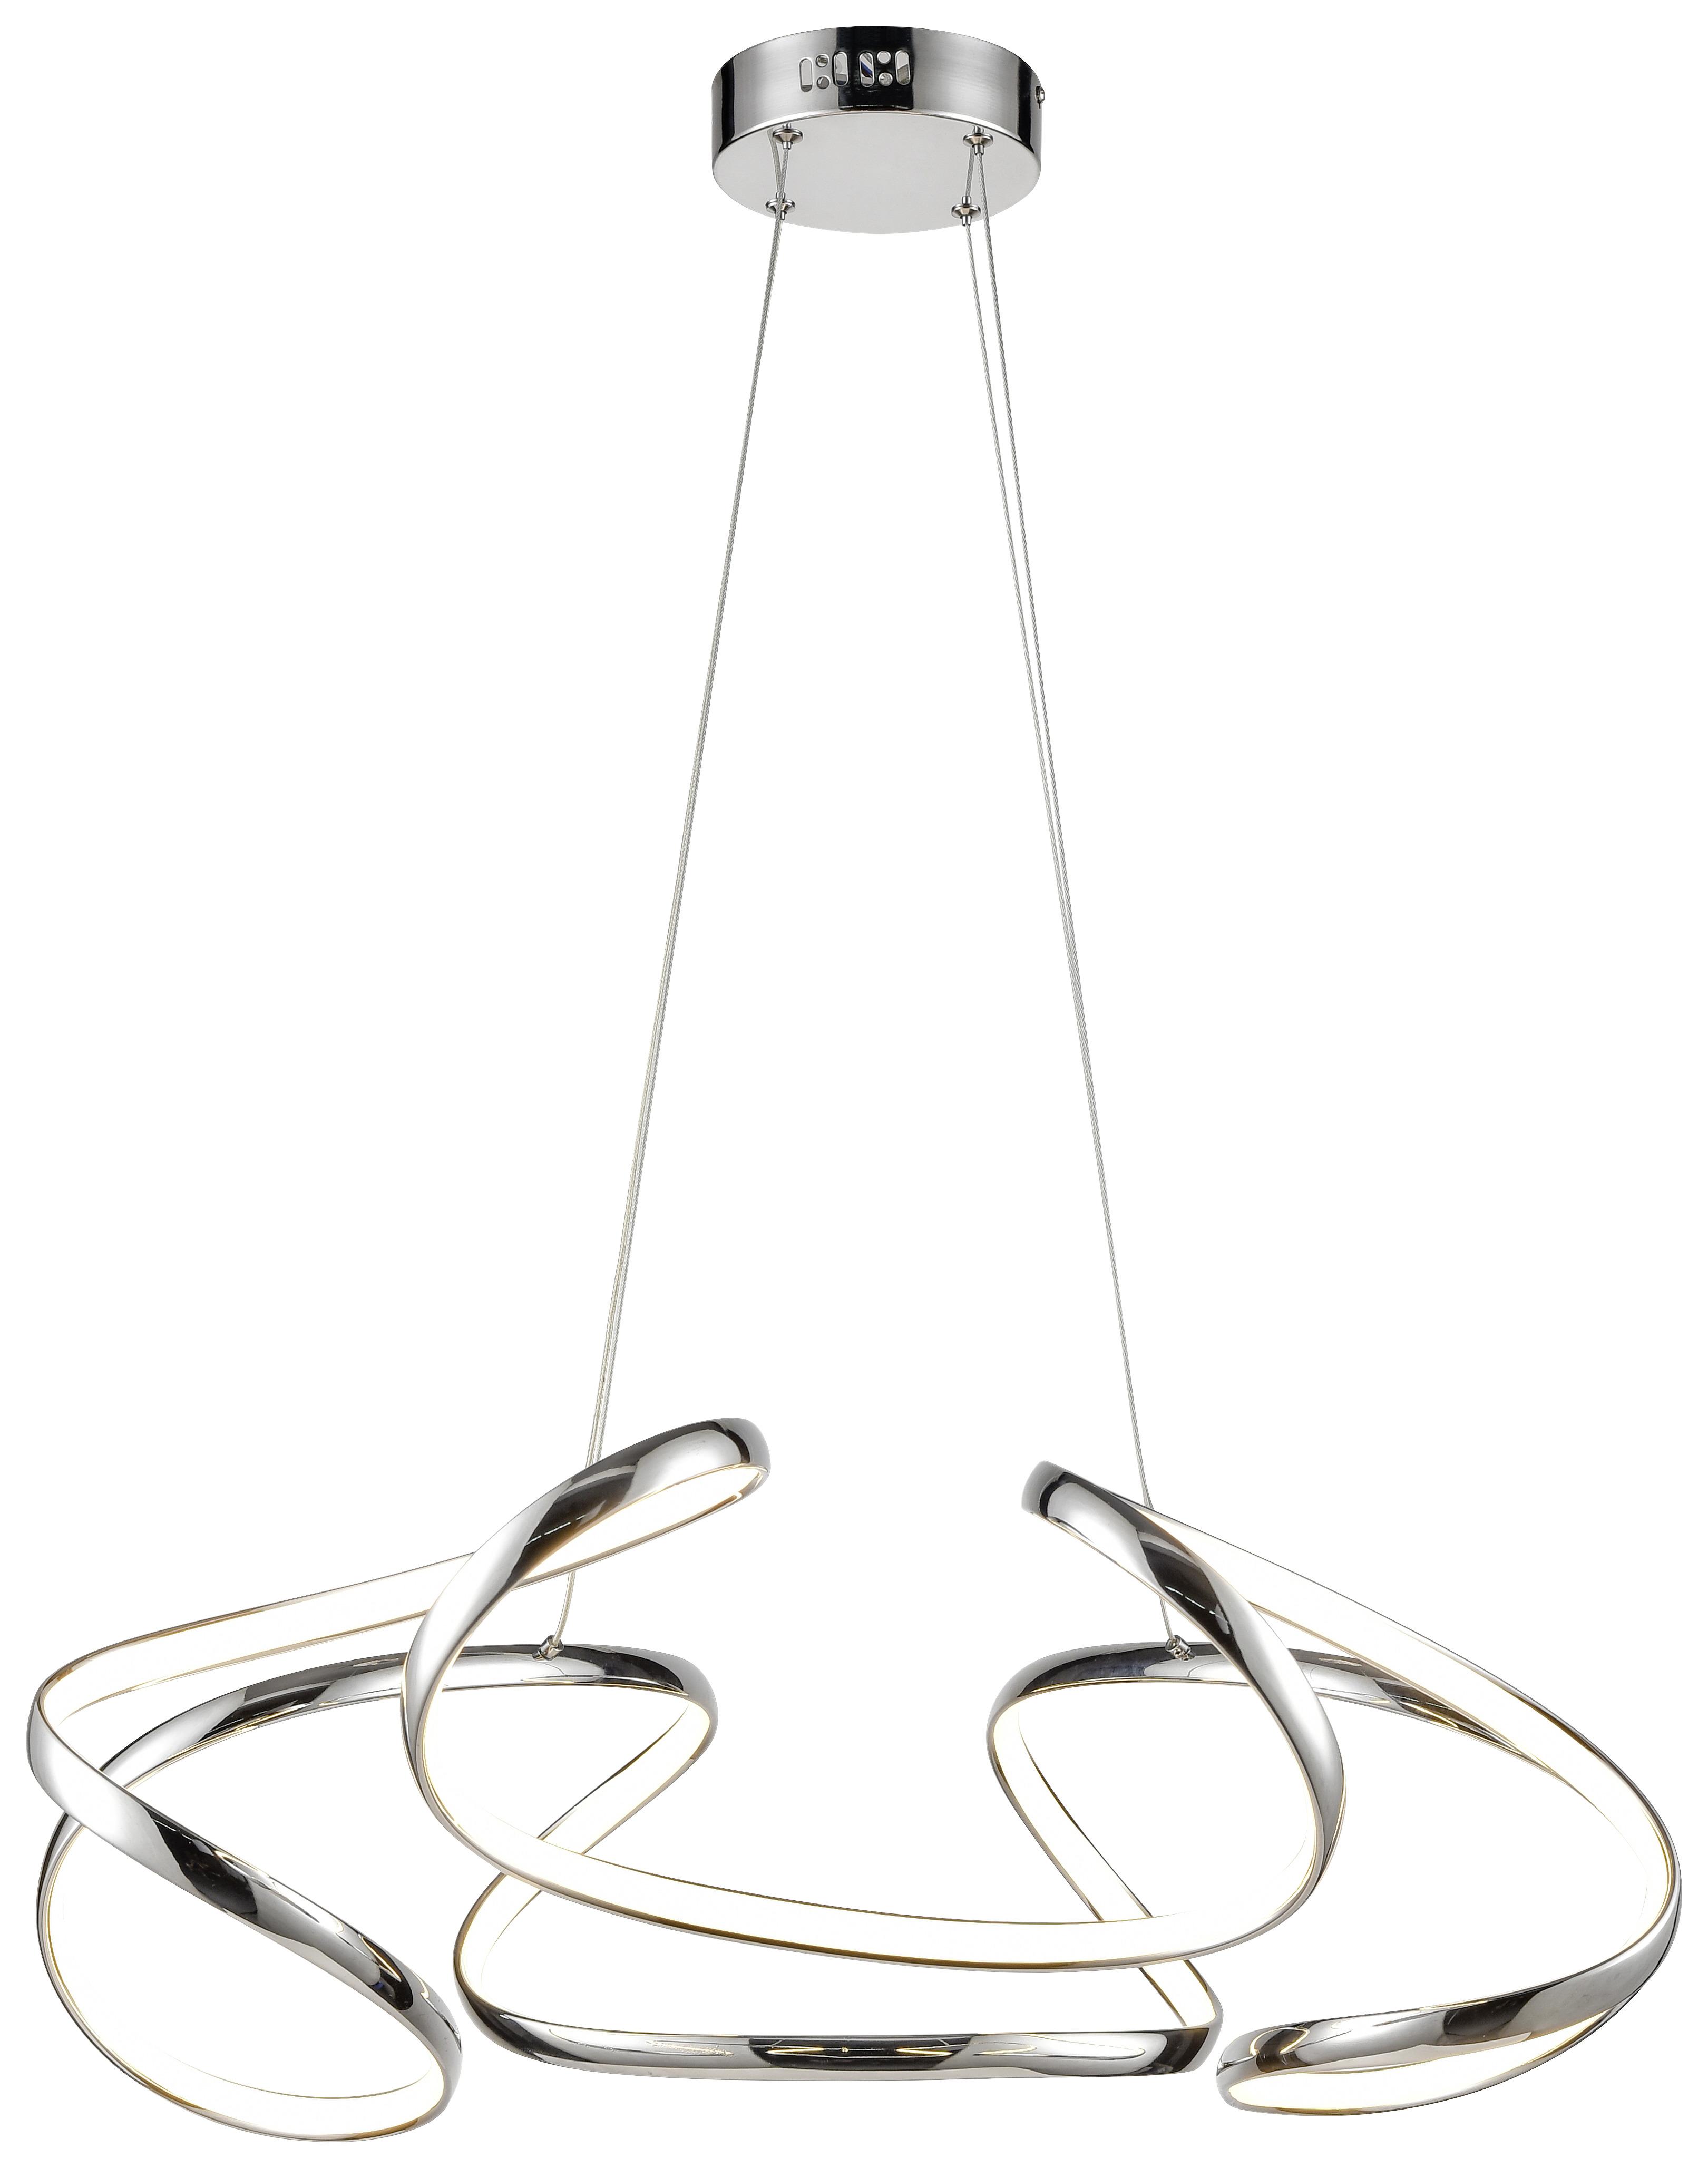 LED-Hängeleuchte Charlotta H: 120 cm 1-Flammig - Chromfarben, MODERN, Kunststoff/Metall (73/120cm) - Luca Bessoni